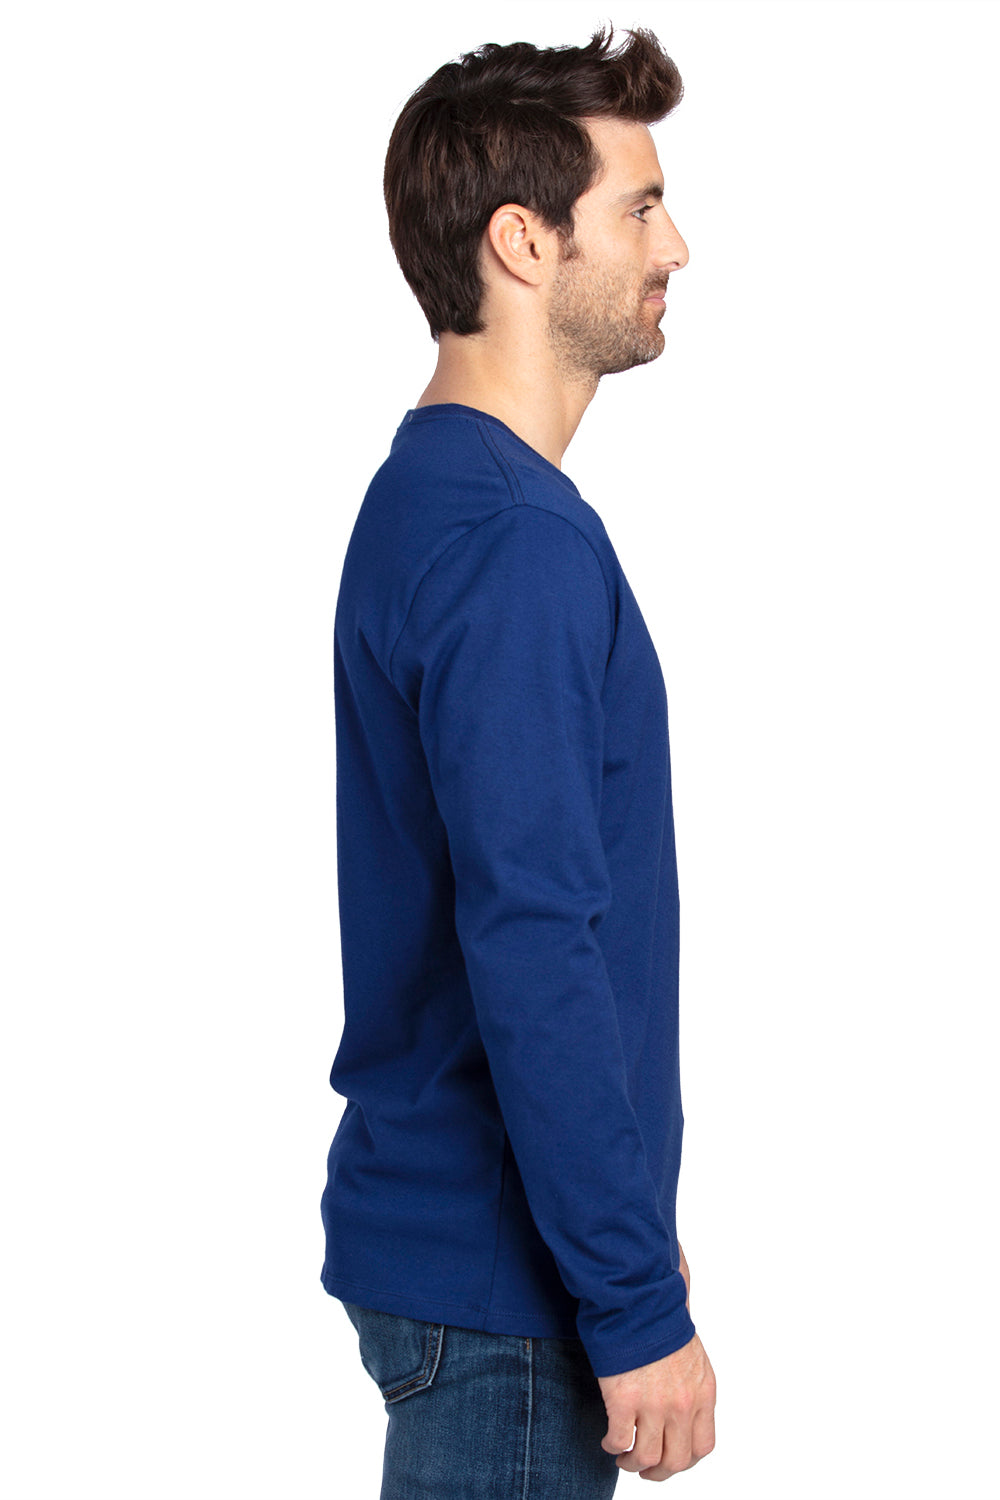 Threadfast Apparel 100LS Mens Ultimate Long Sleeve Crewneck T-Shirt Navy Blue Side